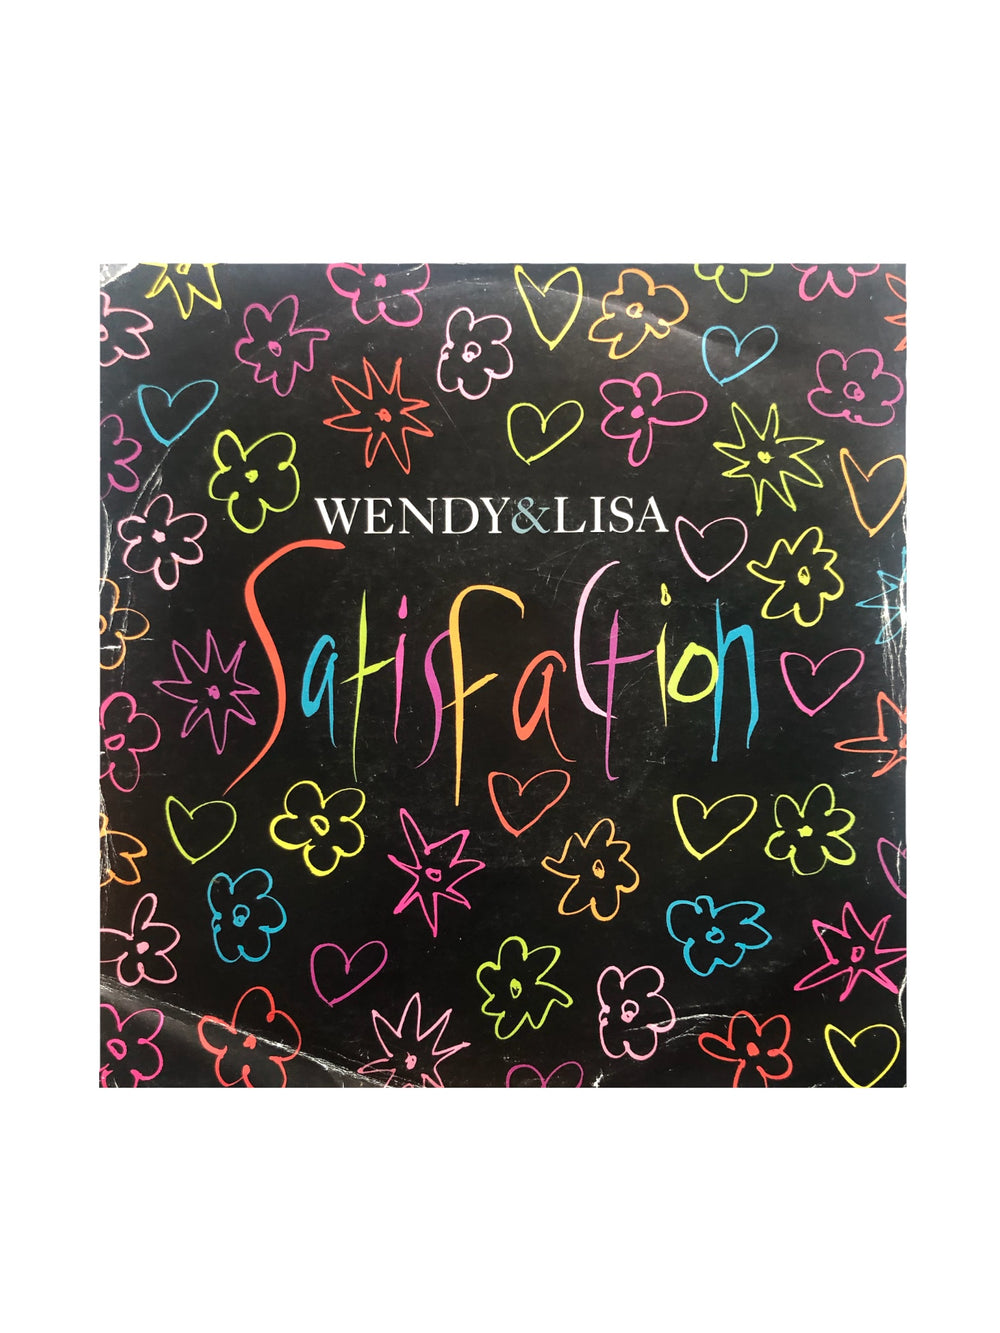 Prince – Wendy & Lisa Satisfaction Remix 7 Inch Vinyl Single UK Preloved:1989